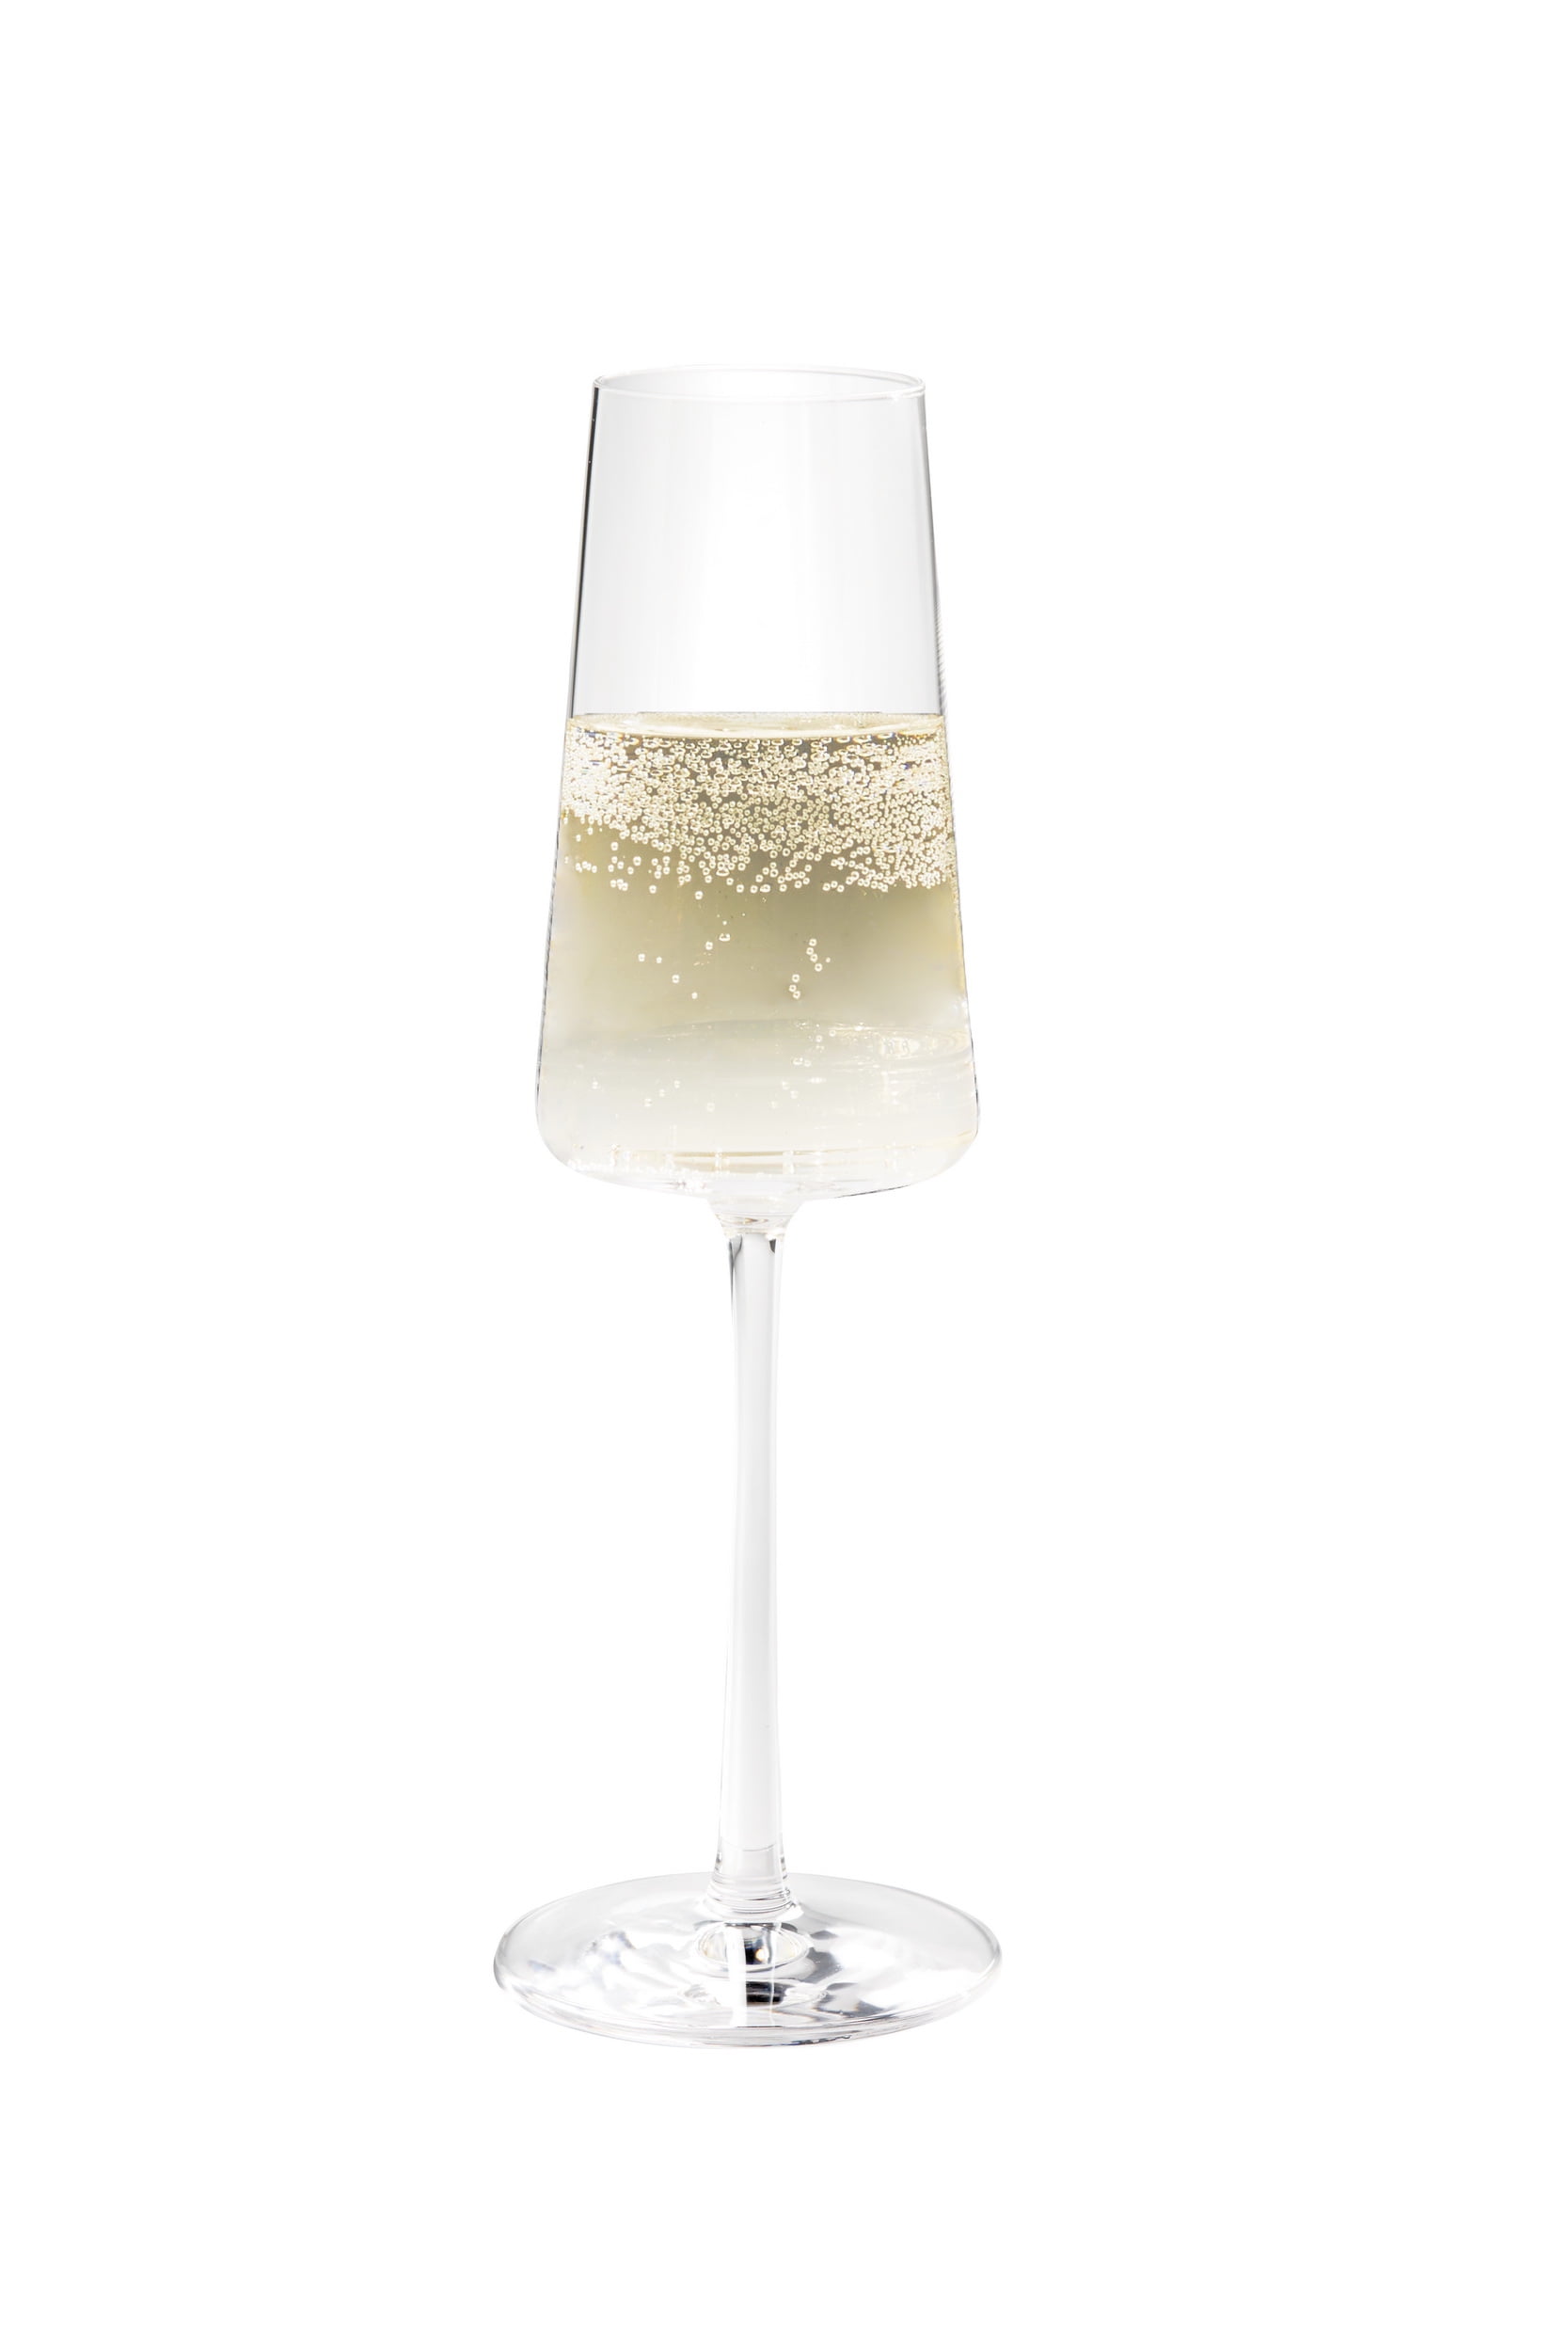 ELIXIR GLASSWARE White Wine Glasses – Hand Blown Crystal Wine Glasses – Set  of 2 Long Stem Wine Glas…See more ELIXIR GLASSWARE White Wine Glasses –